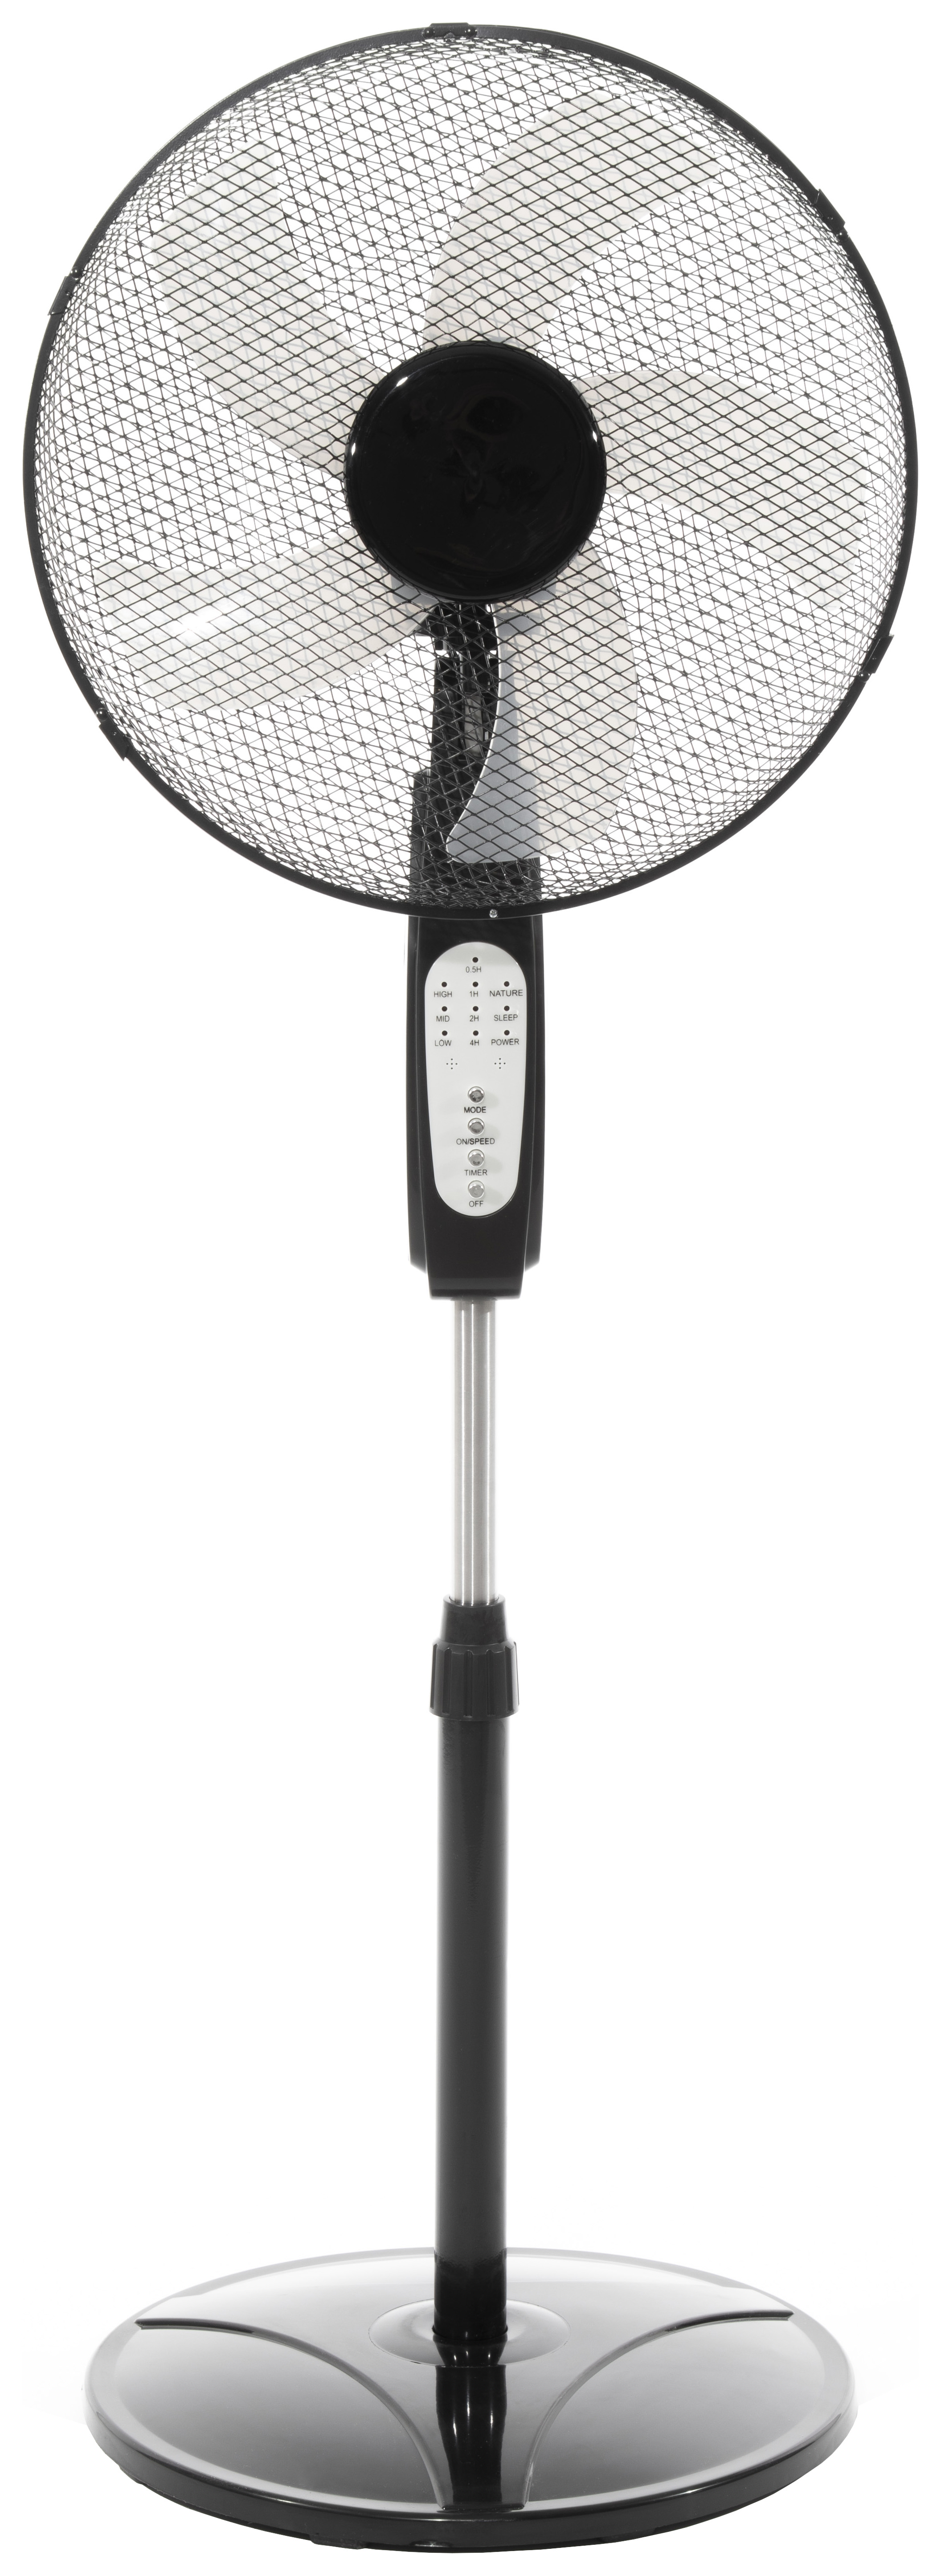 Pedestal Fan with remote - 16in